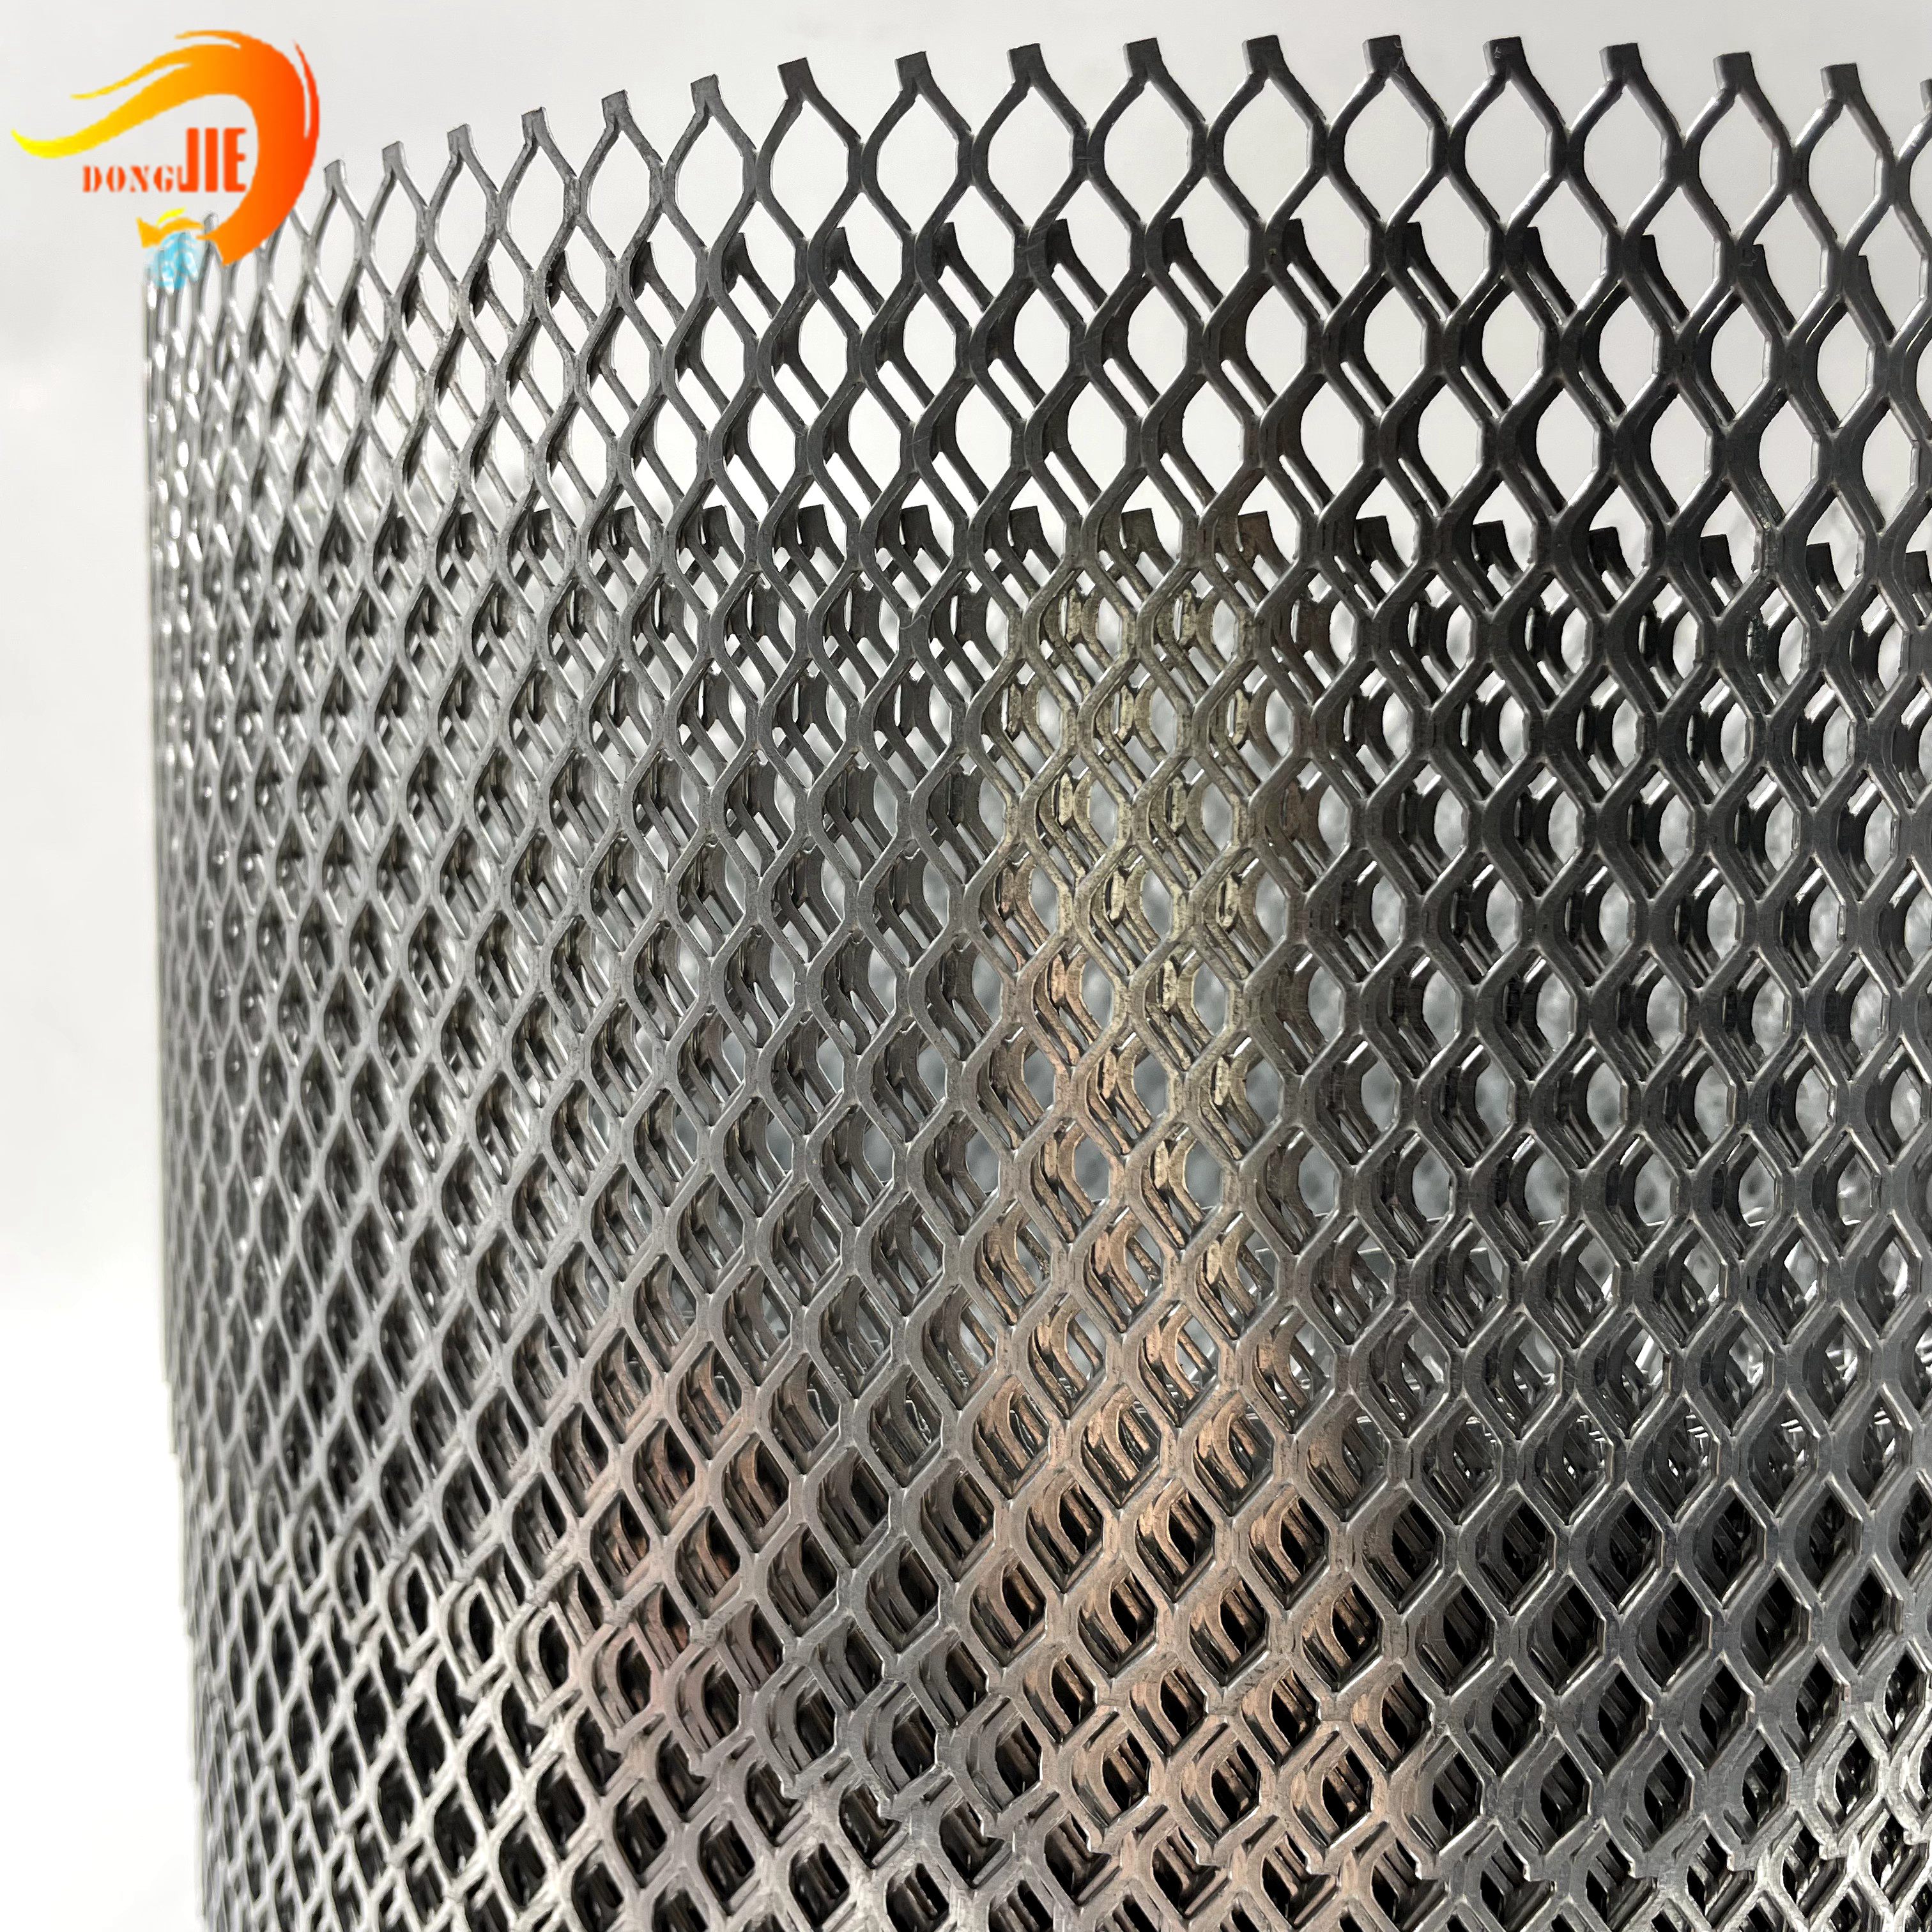 Manufacturer of Ceiling Mesh – Wholesale expanded mesh metal cartridge filter mesh – Dongjie